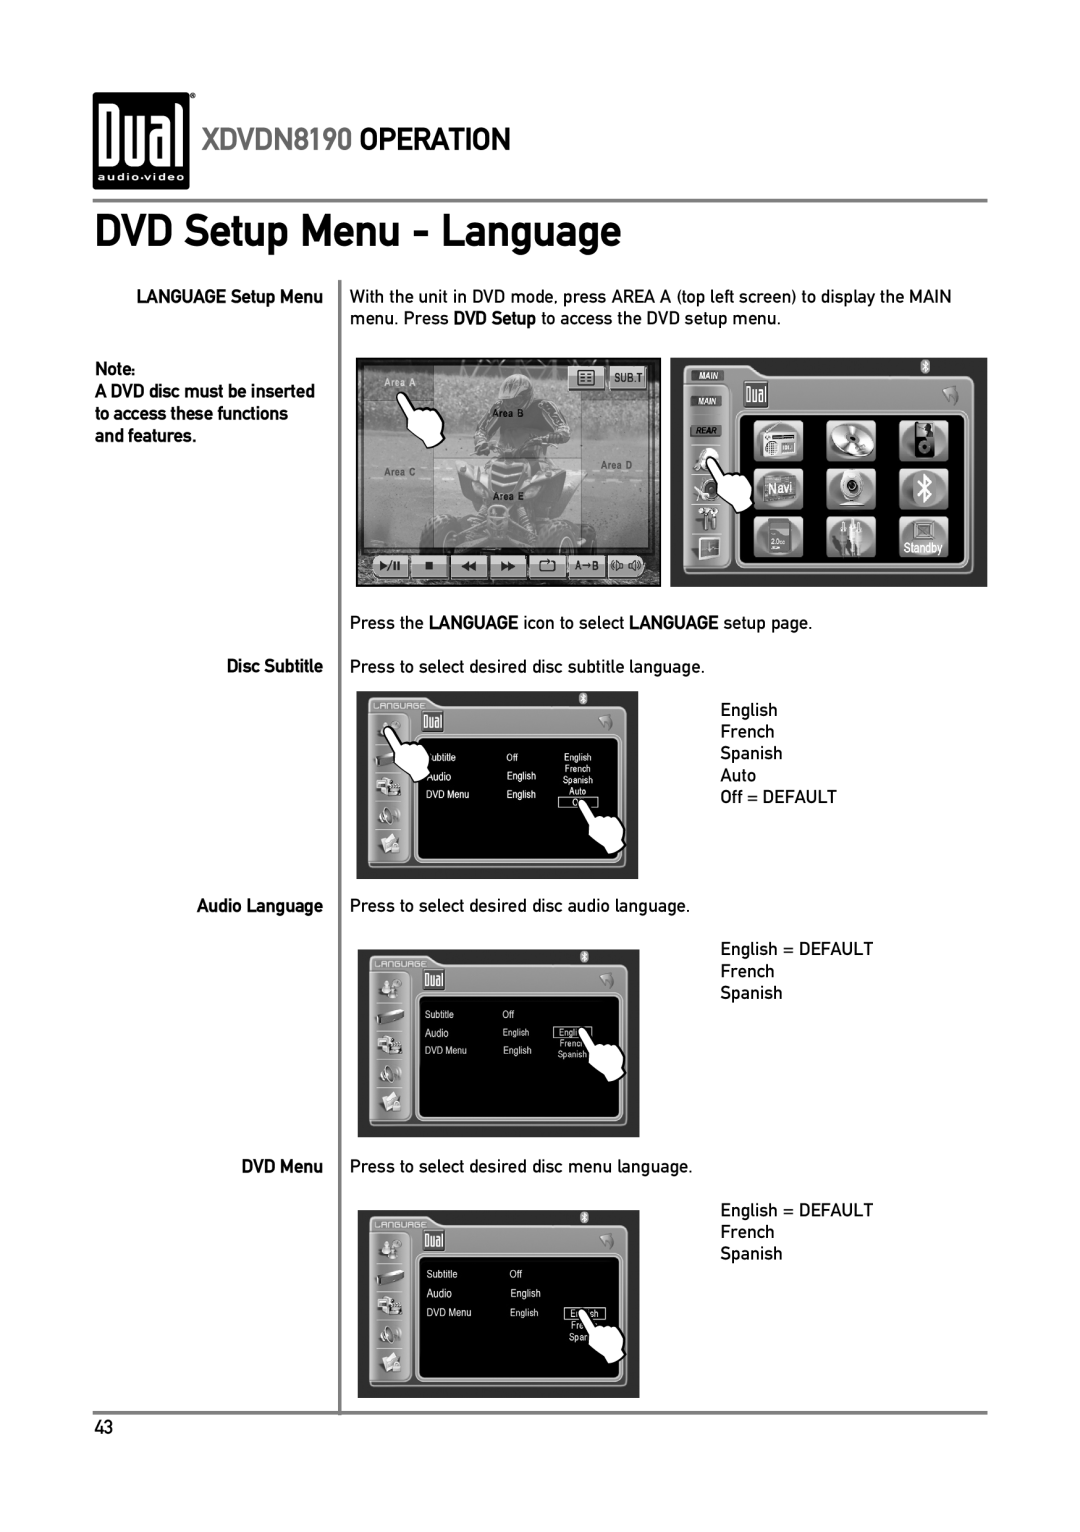 Dual DVD Setup Menu - Language, XDVDN8190 OPERATION, LANGUAGE Setup Menu, Disc Subtitle Audio Language DVD Menu 